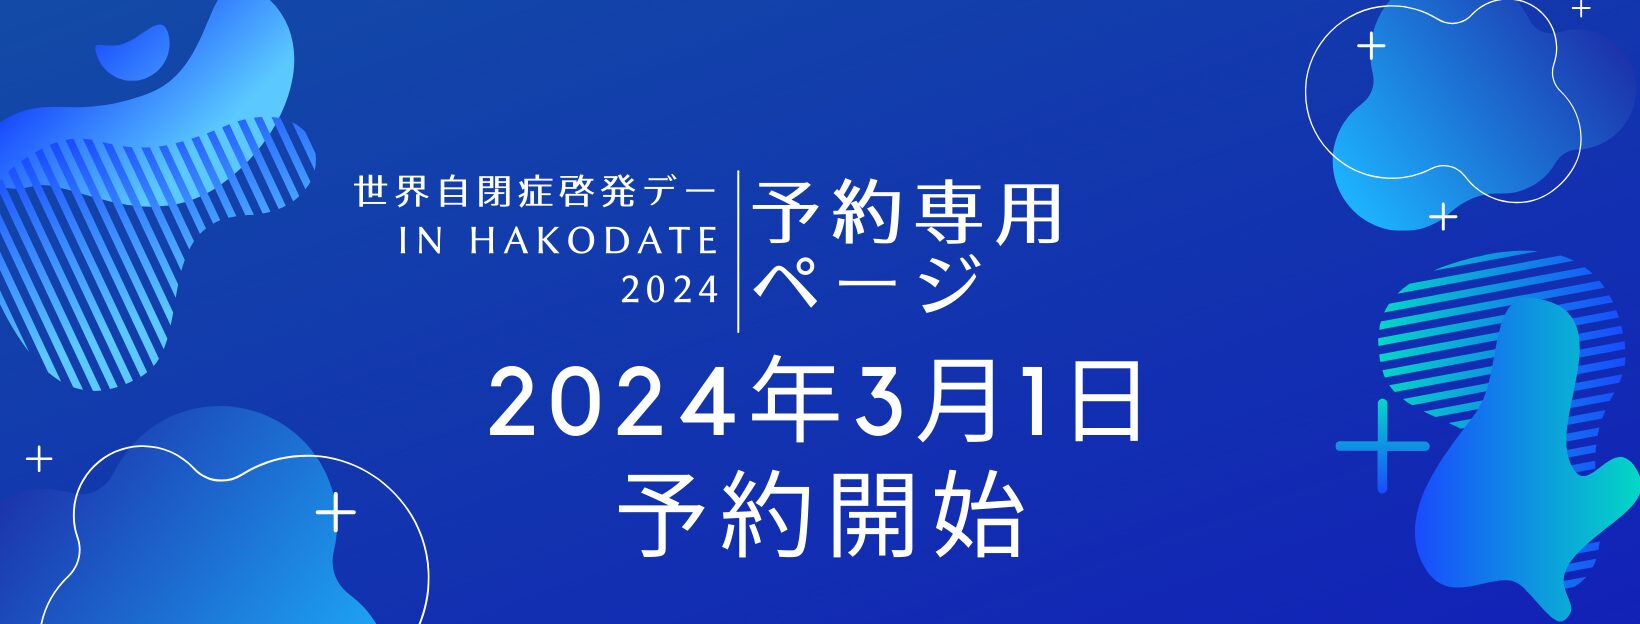 世界自閉症啓発デー in Hakodate 2024 予約専用ページ